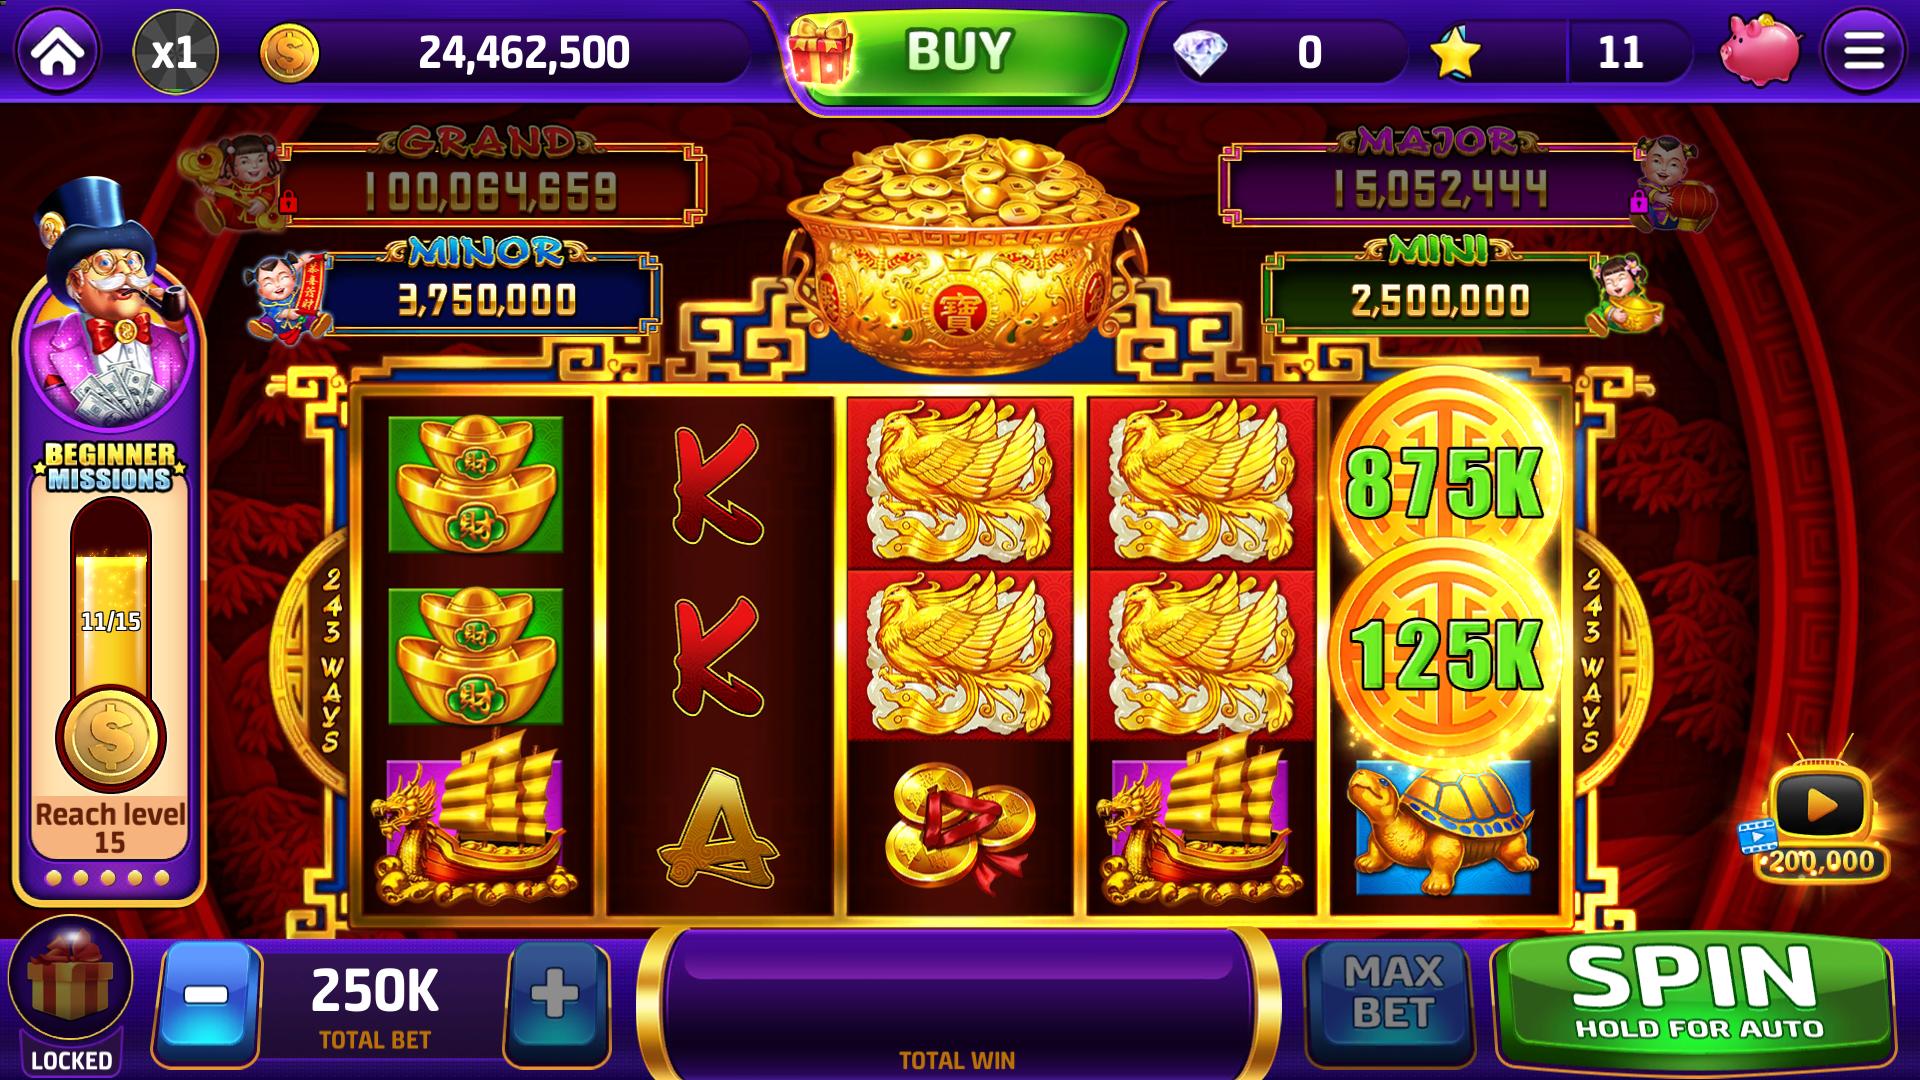 Triple Win Slots Pop Vegas Casino Slots 1.41 Screenshot 7